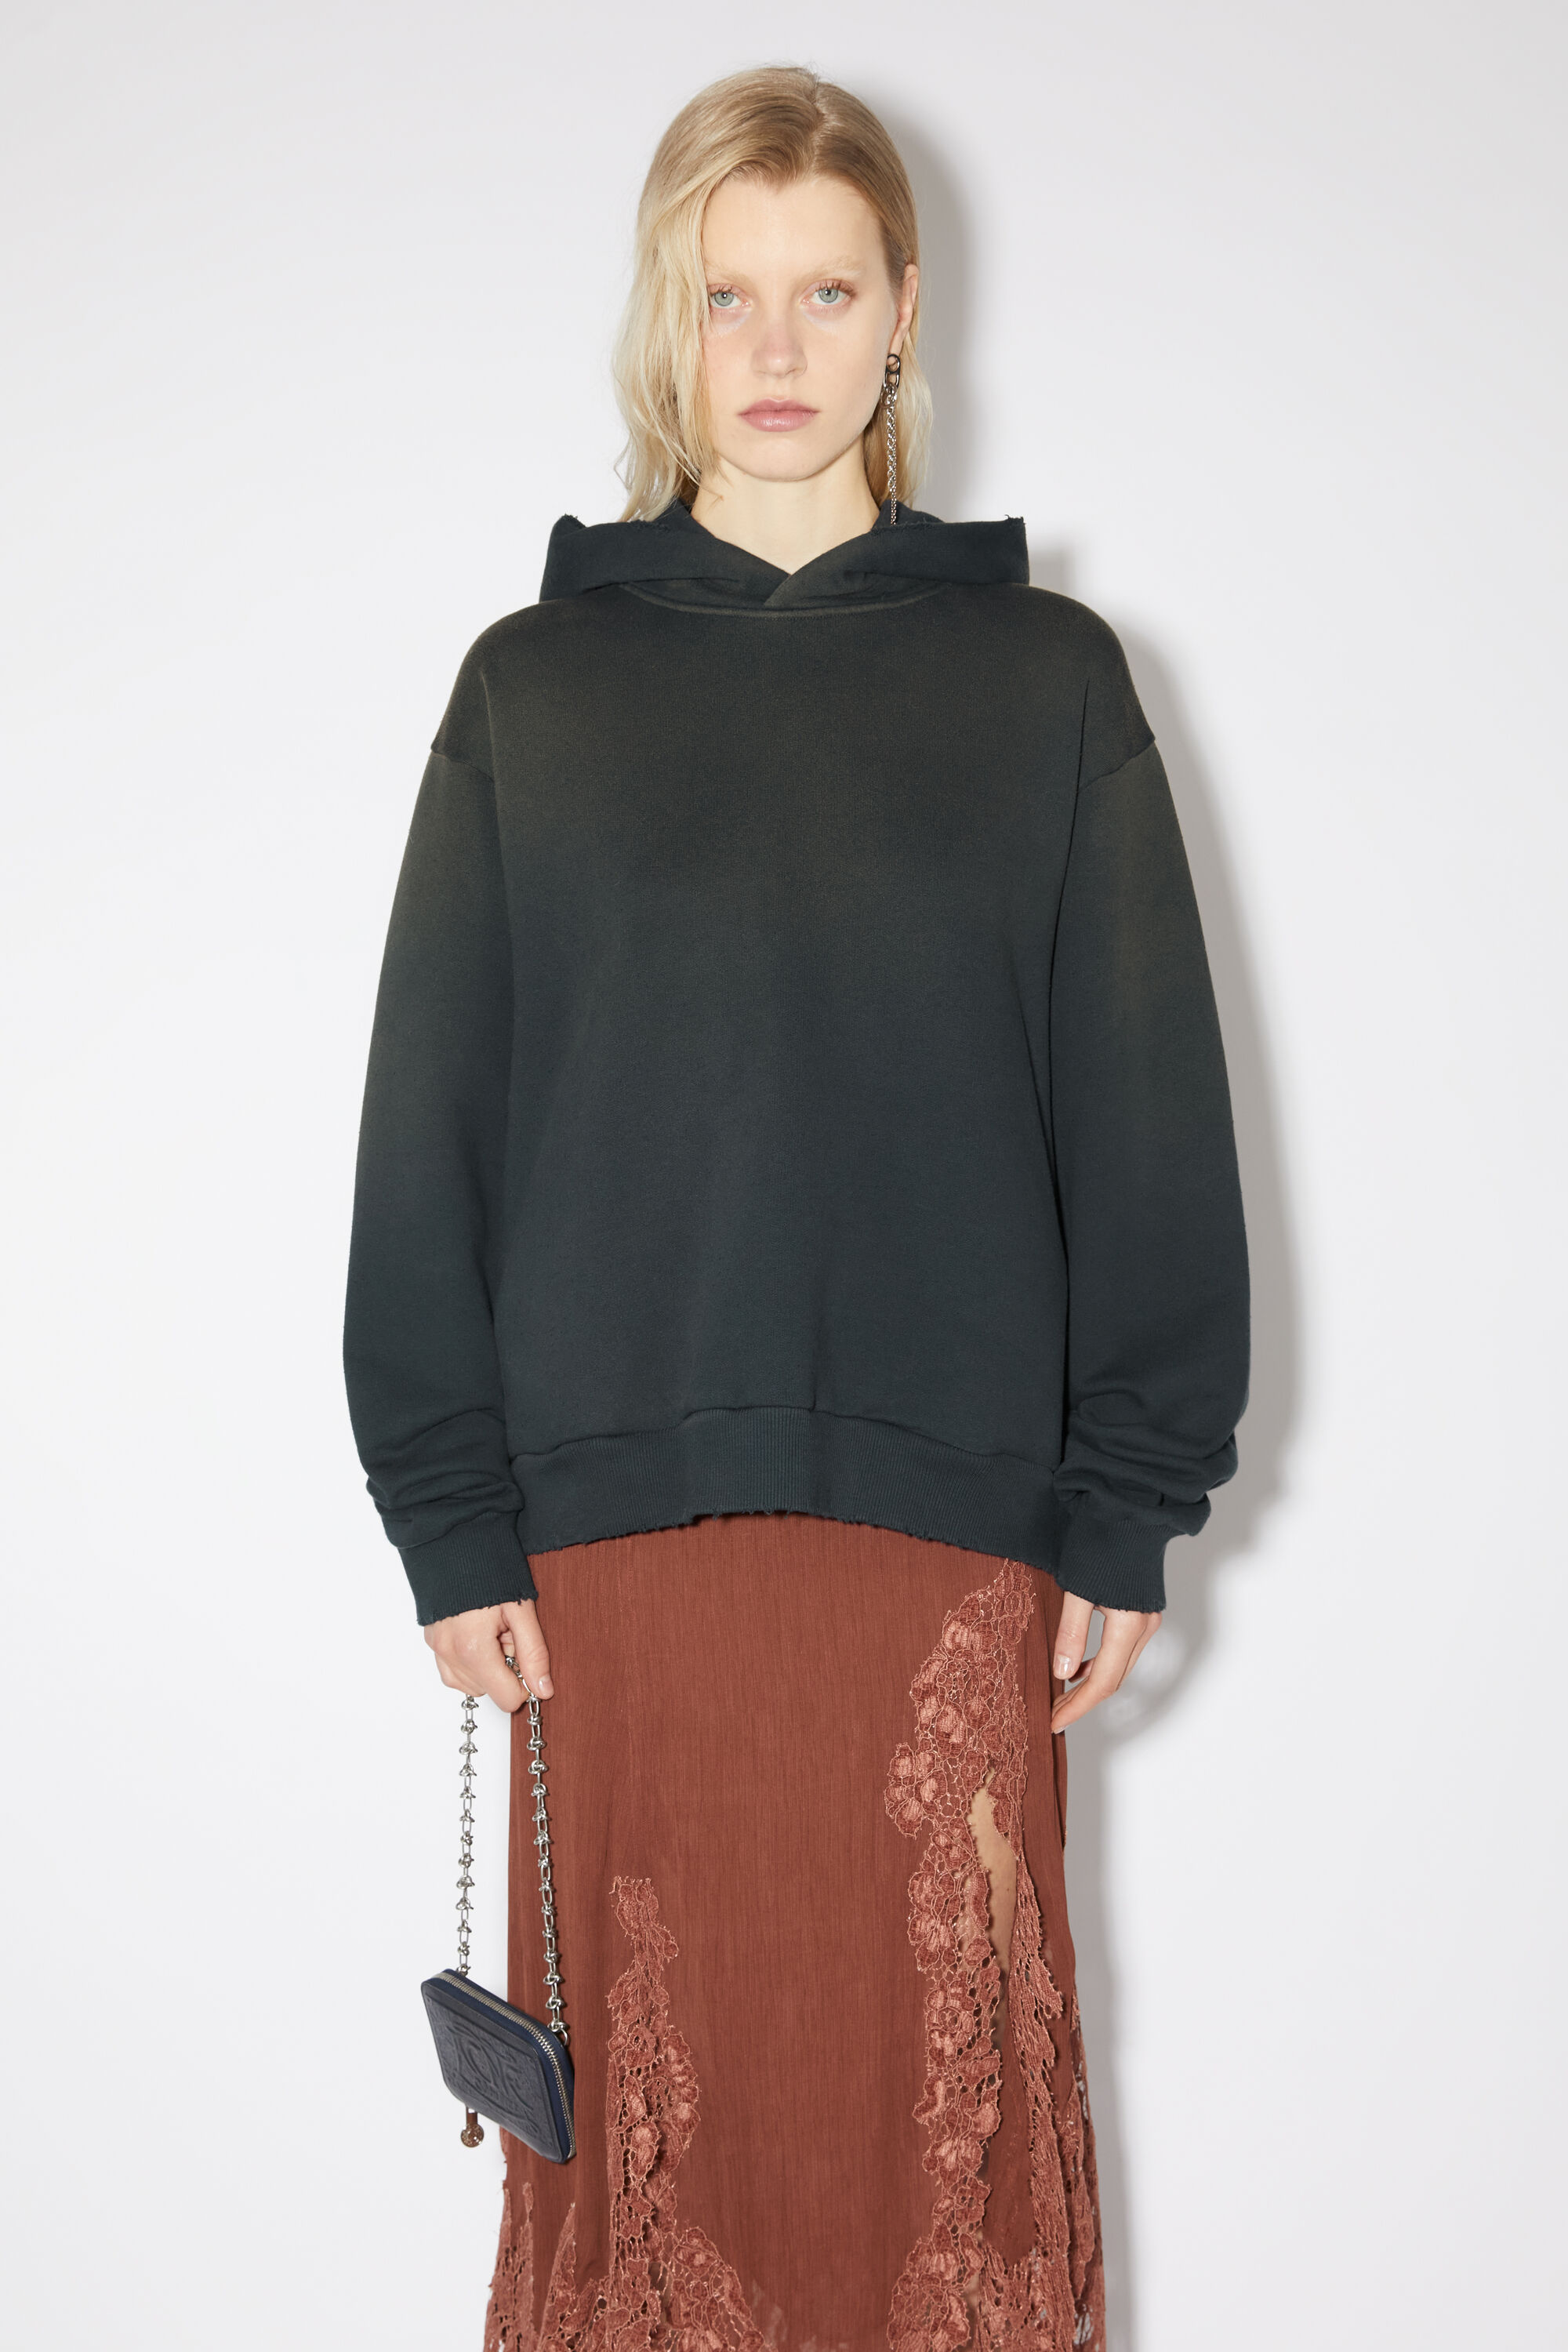 Acne Studios – Women’s Sweatshirts